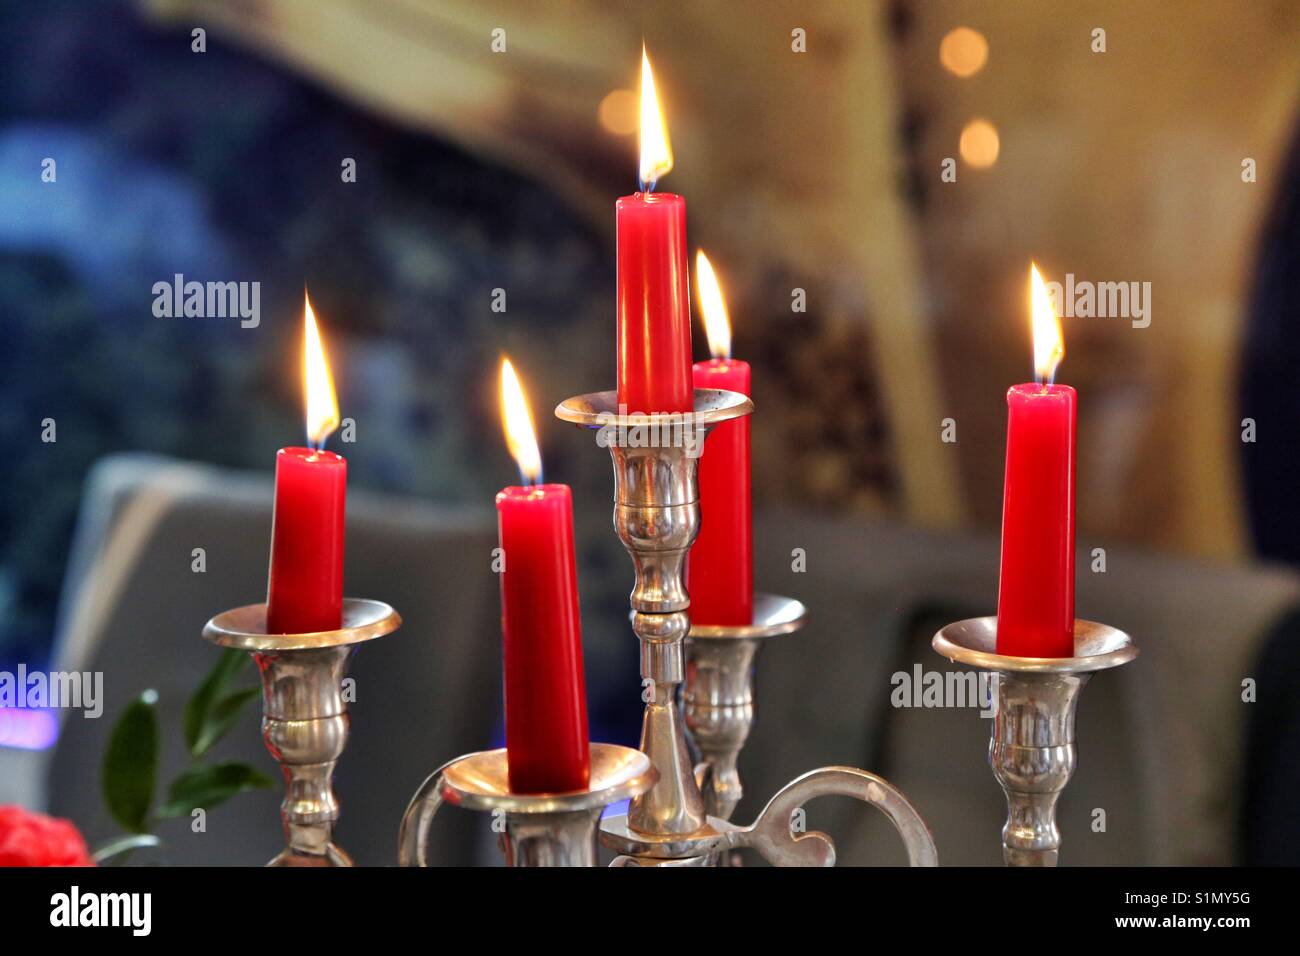 Argento candelabro con candele rosse Foto stock - Alamy